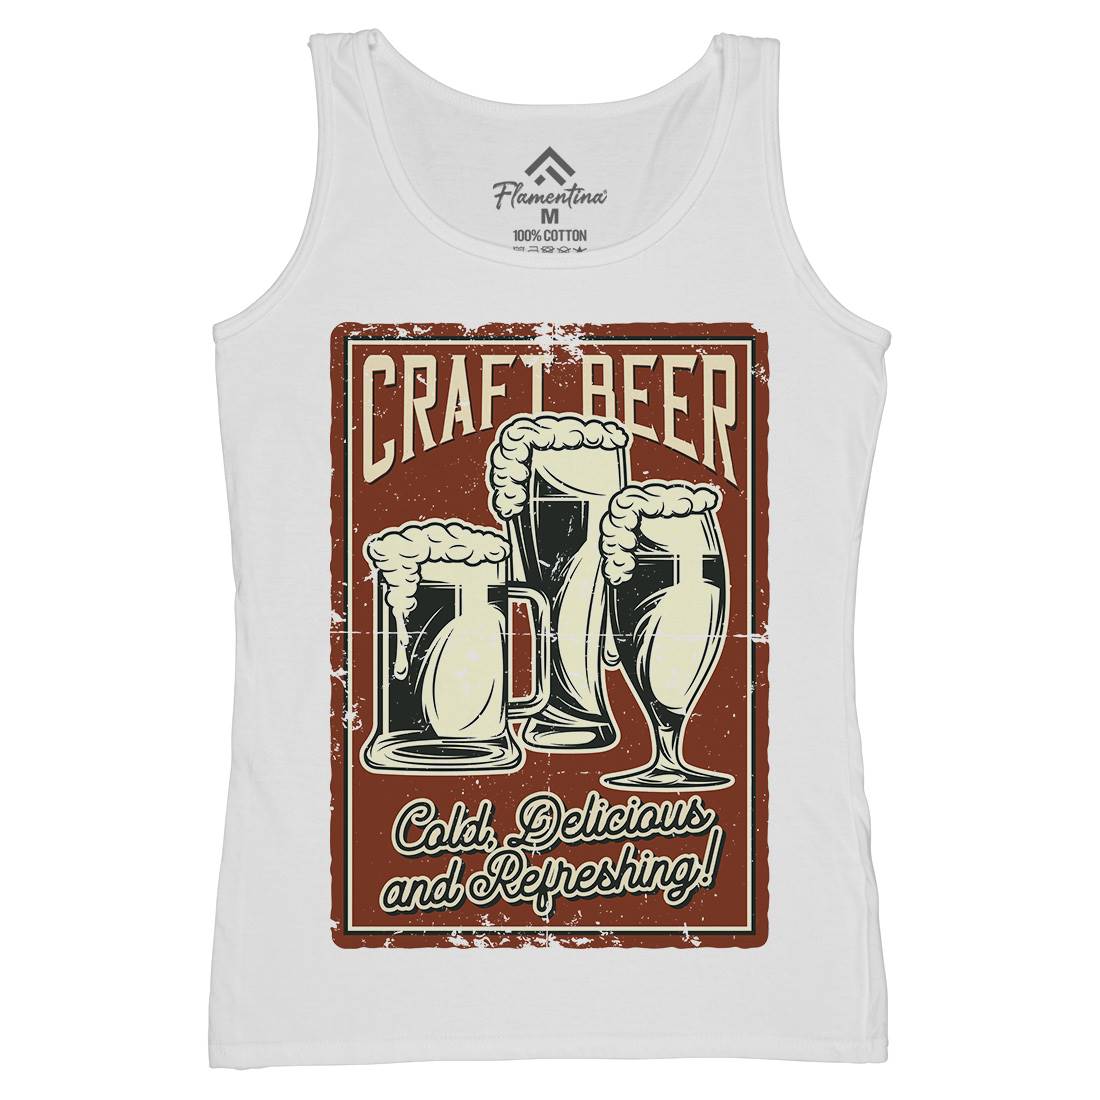 Craft Beer Womens Organic Tank Top Vest Drinks B281